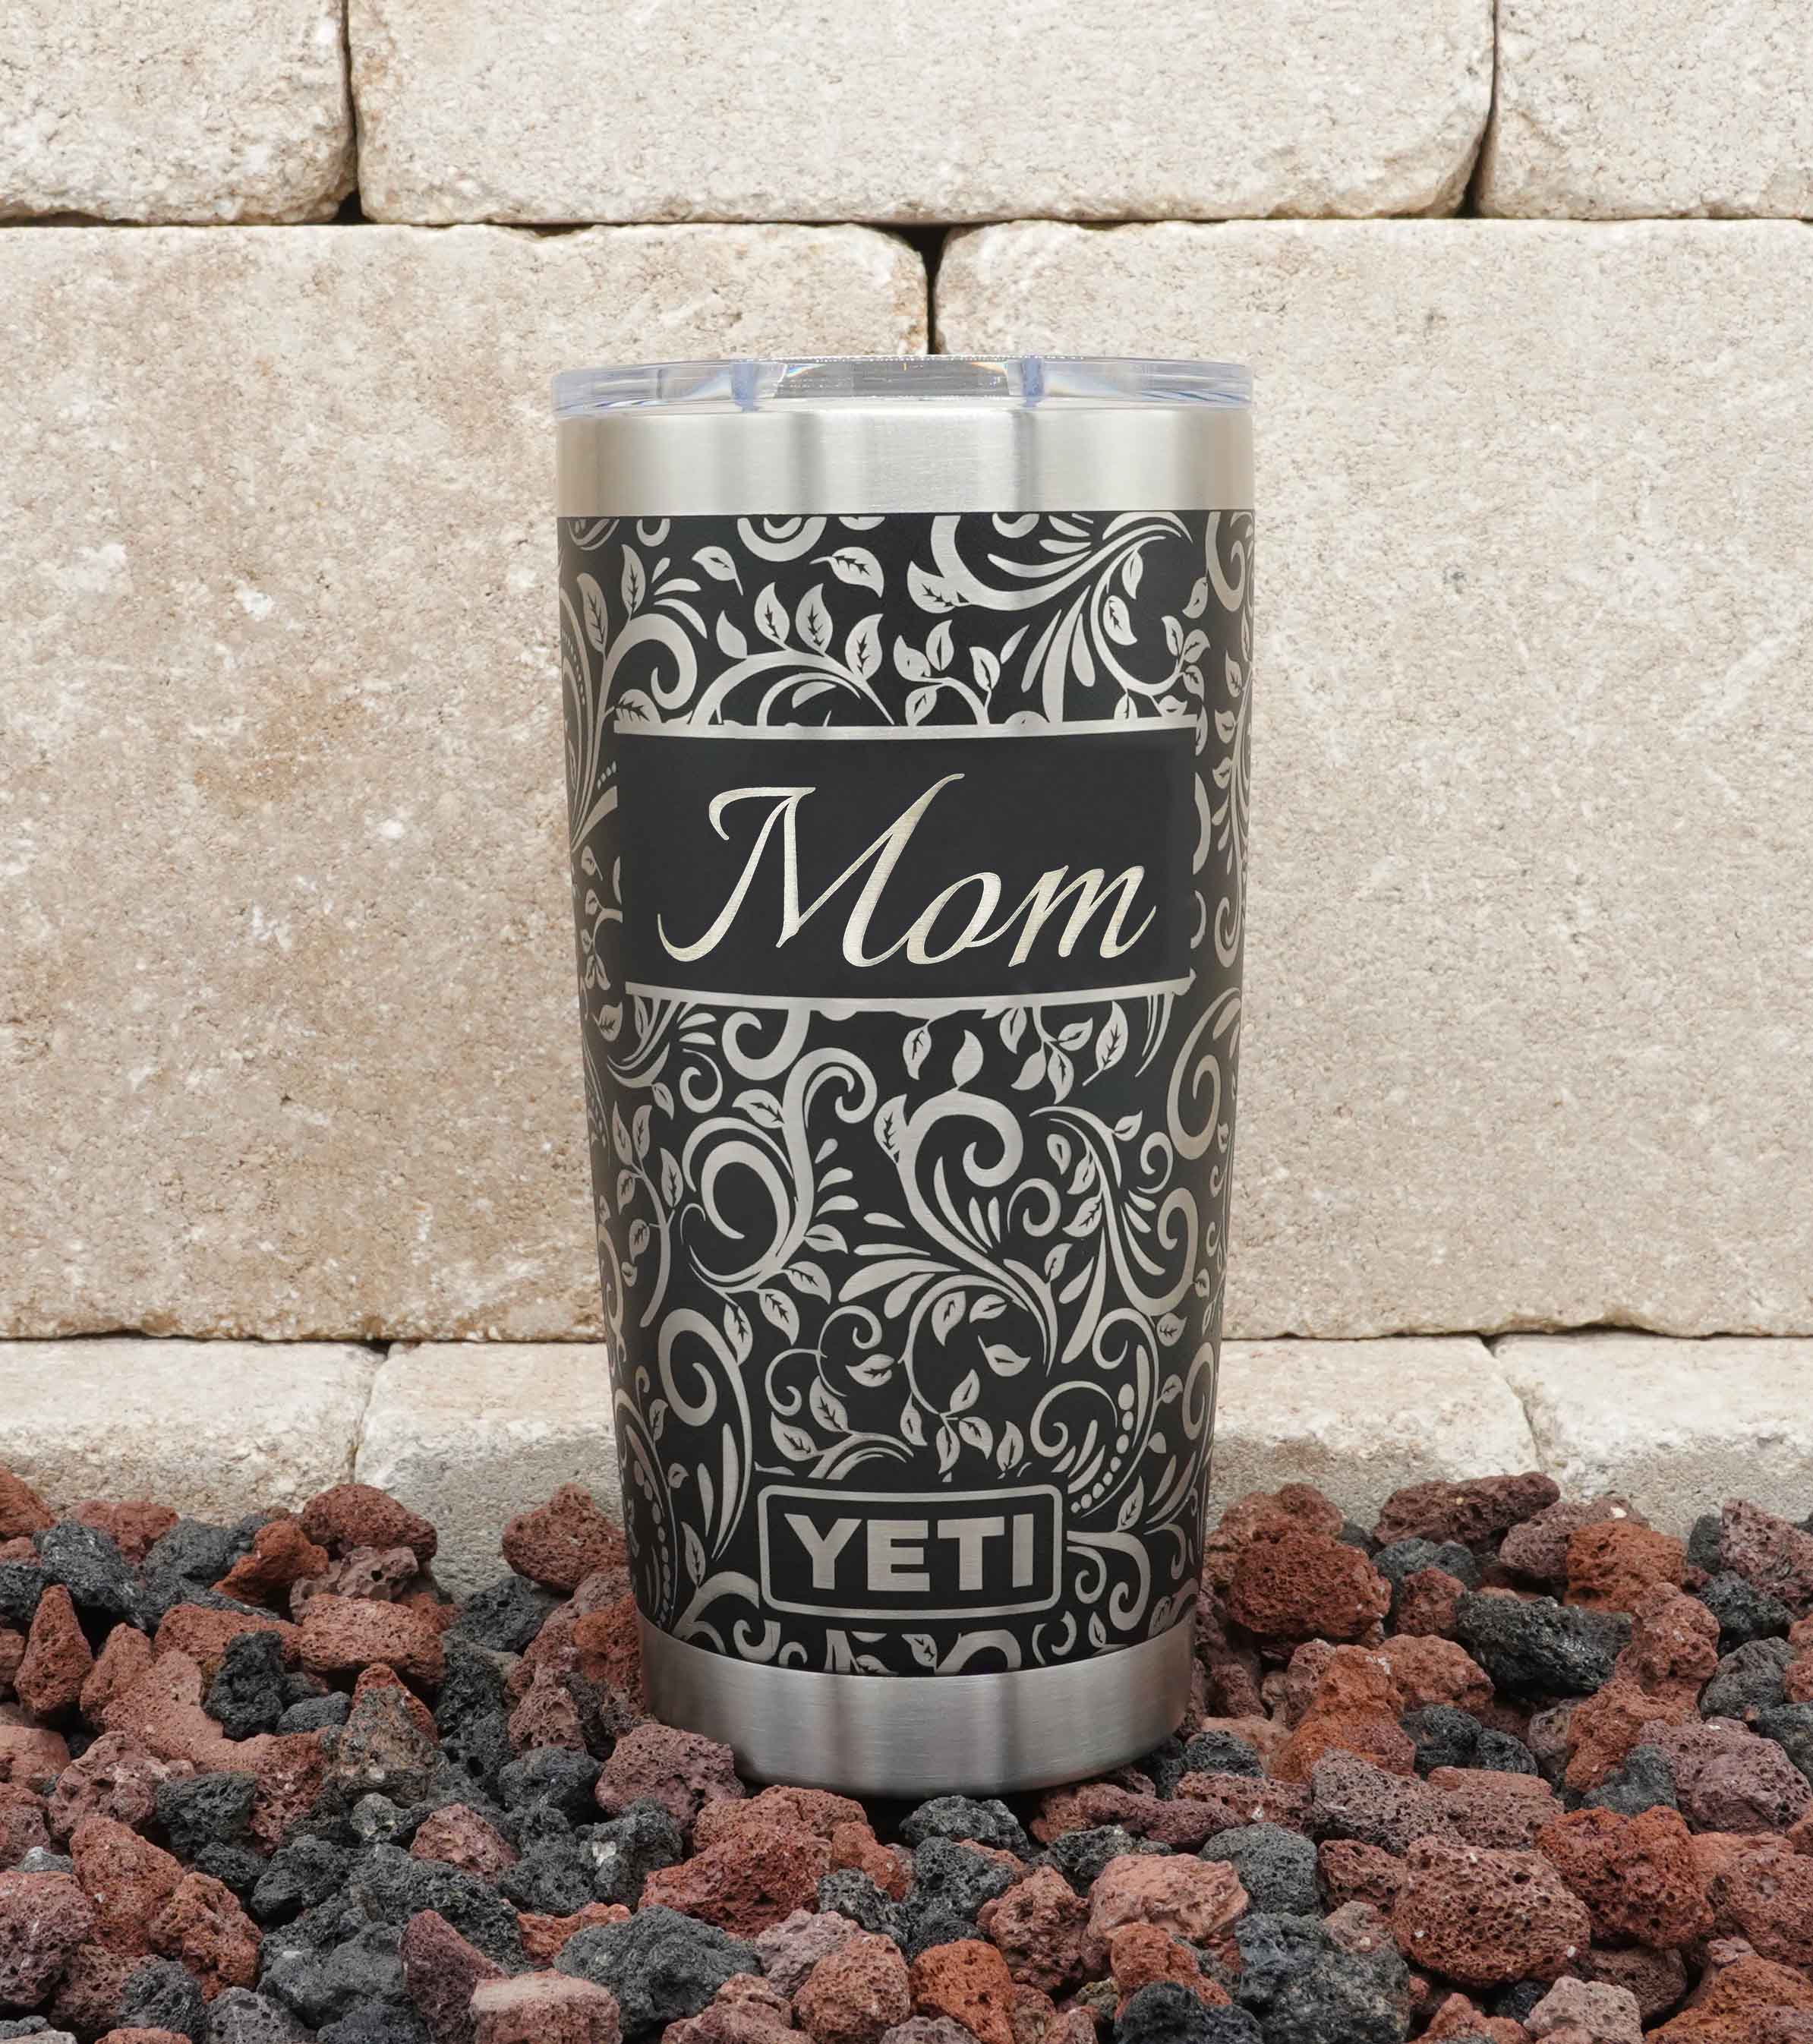 Yeti Cup Holder - Shop on Pinterest